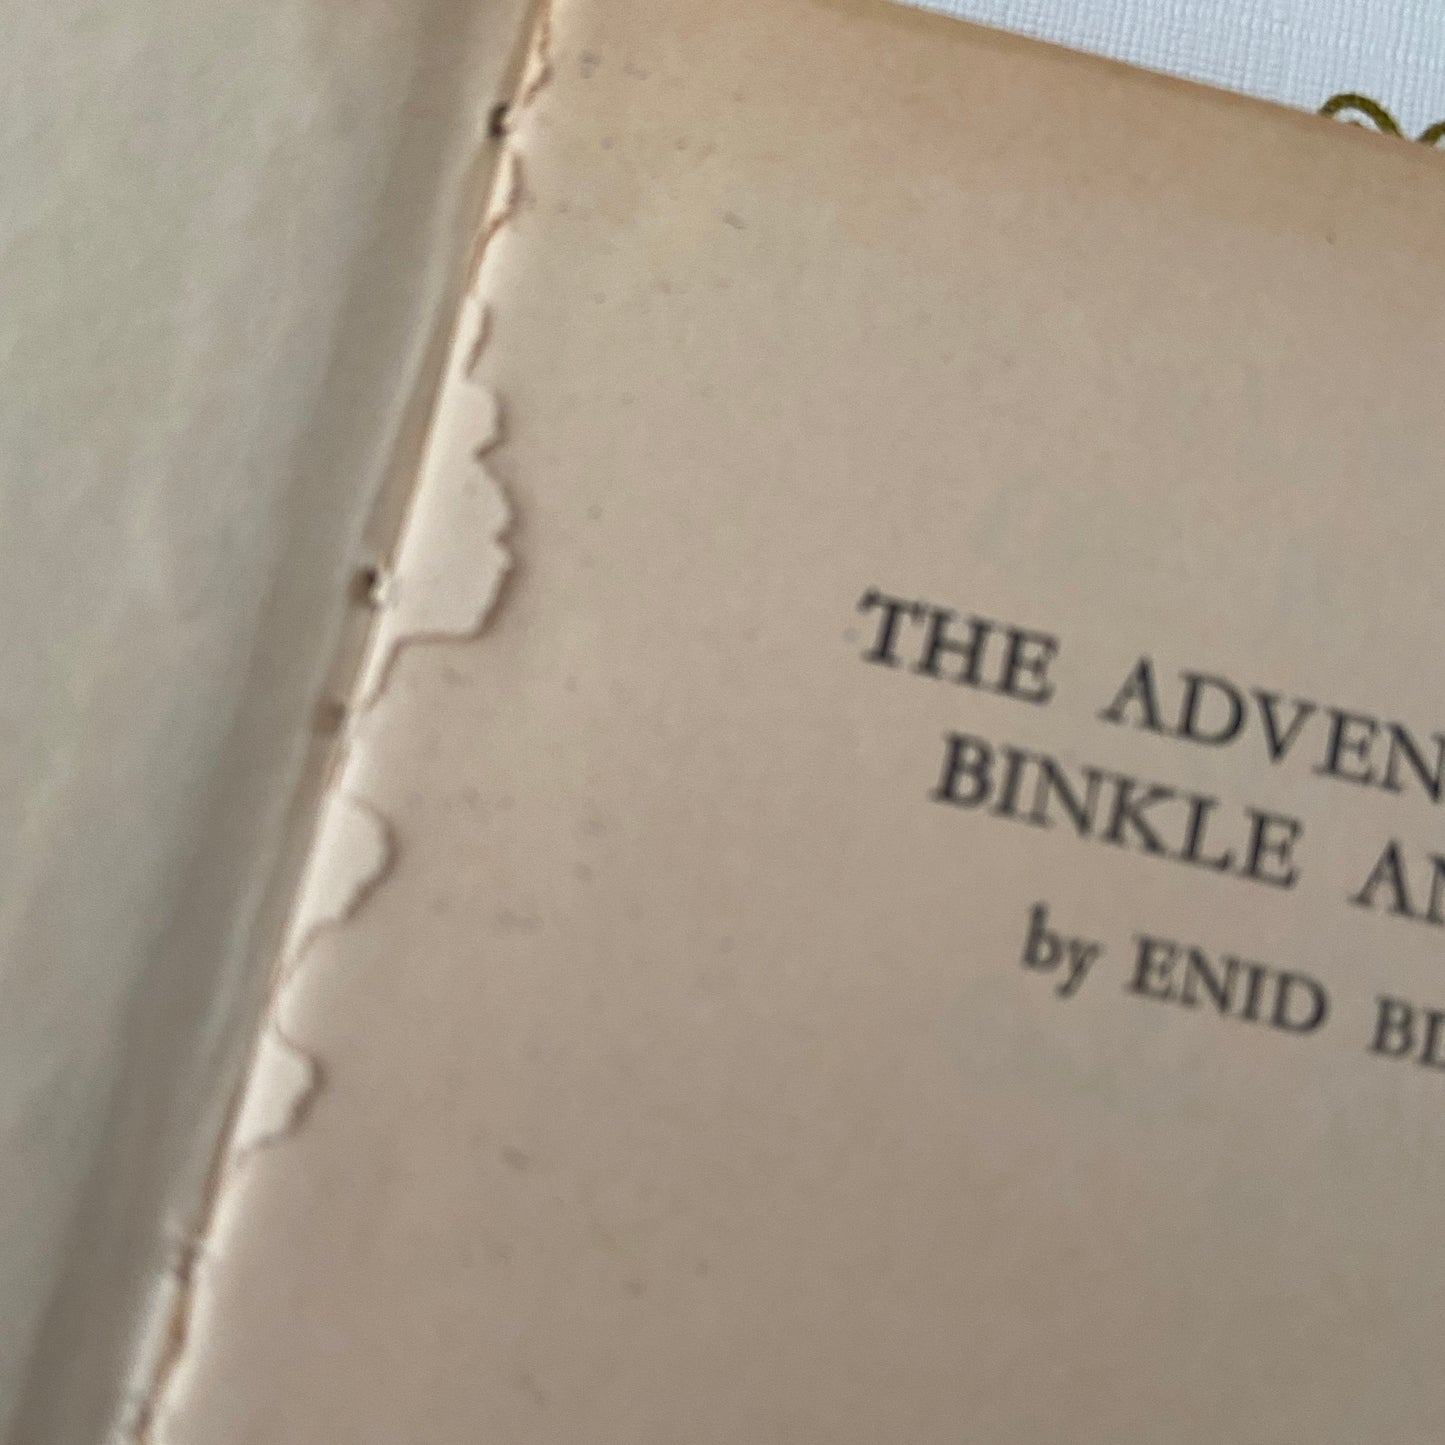 Enid Blyton The Adventures of Binkle and Flop Vintage Children's Book